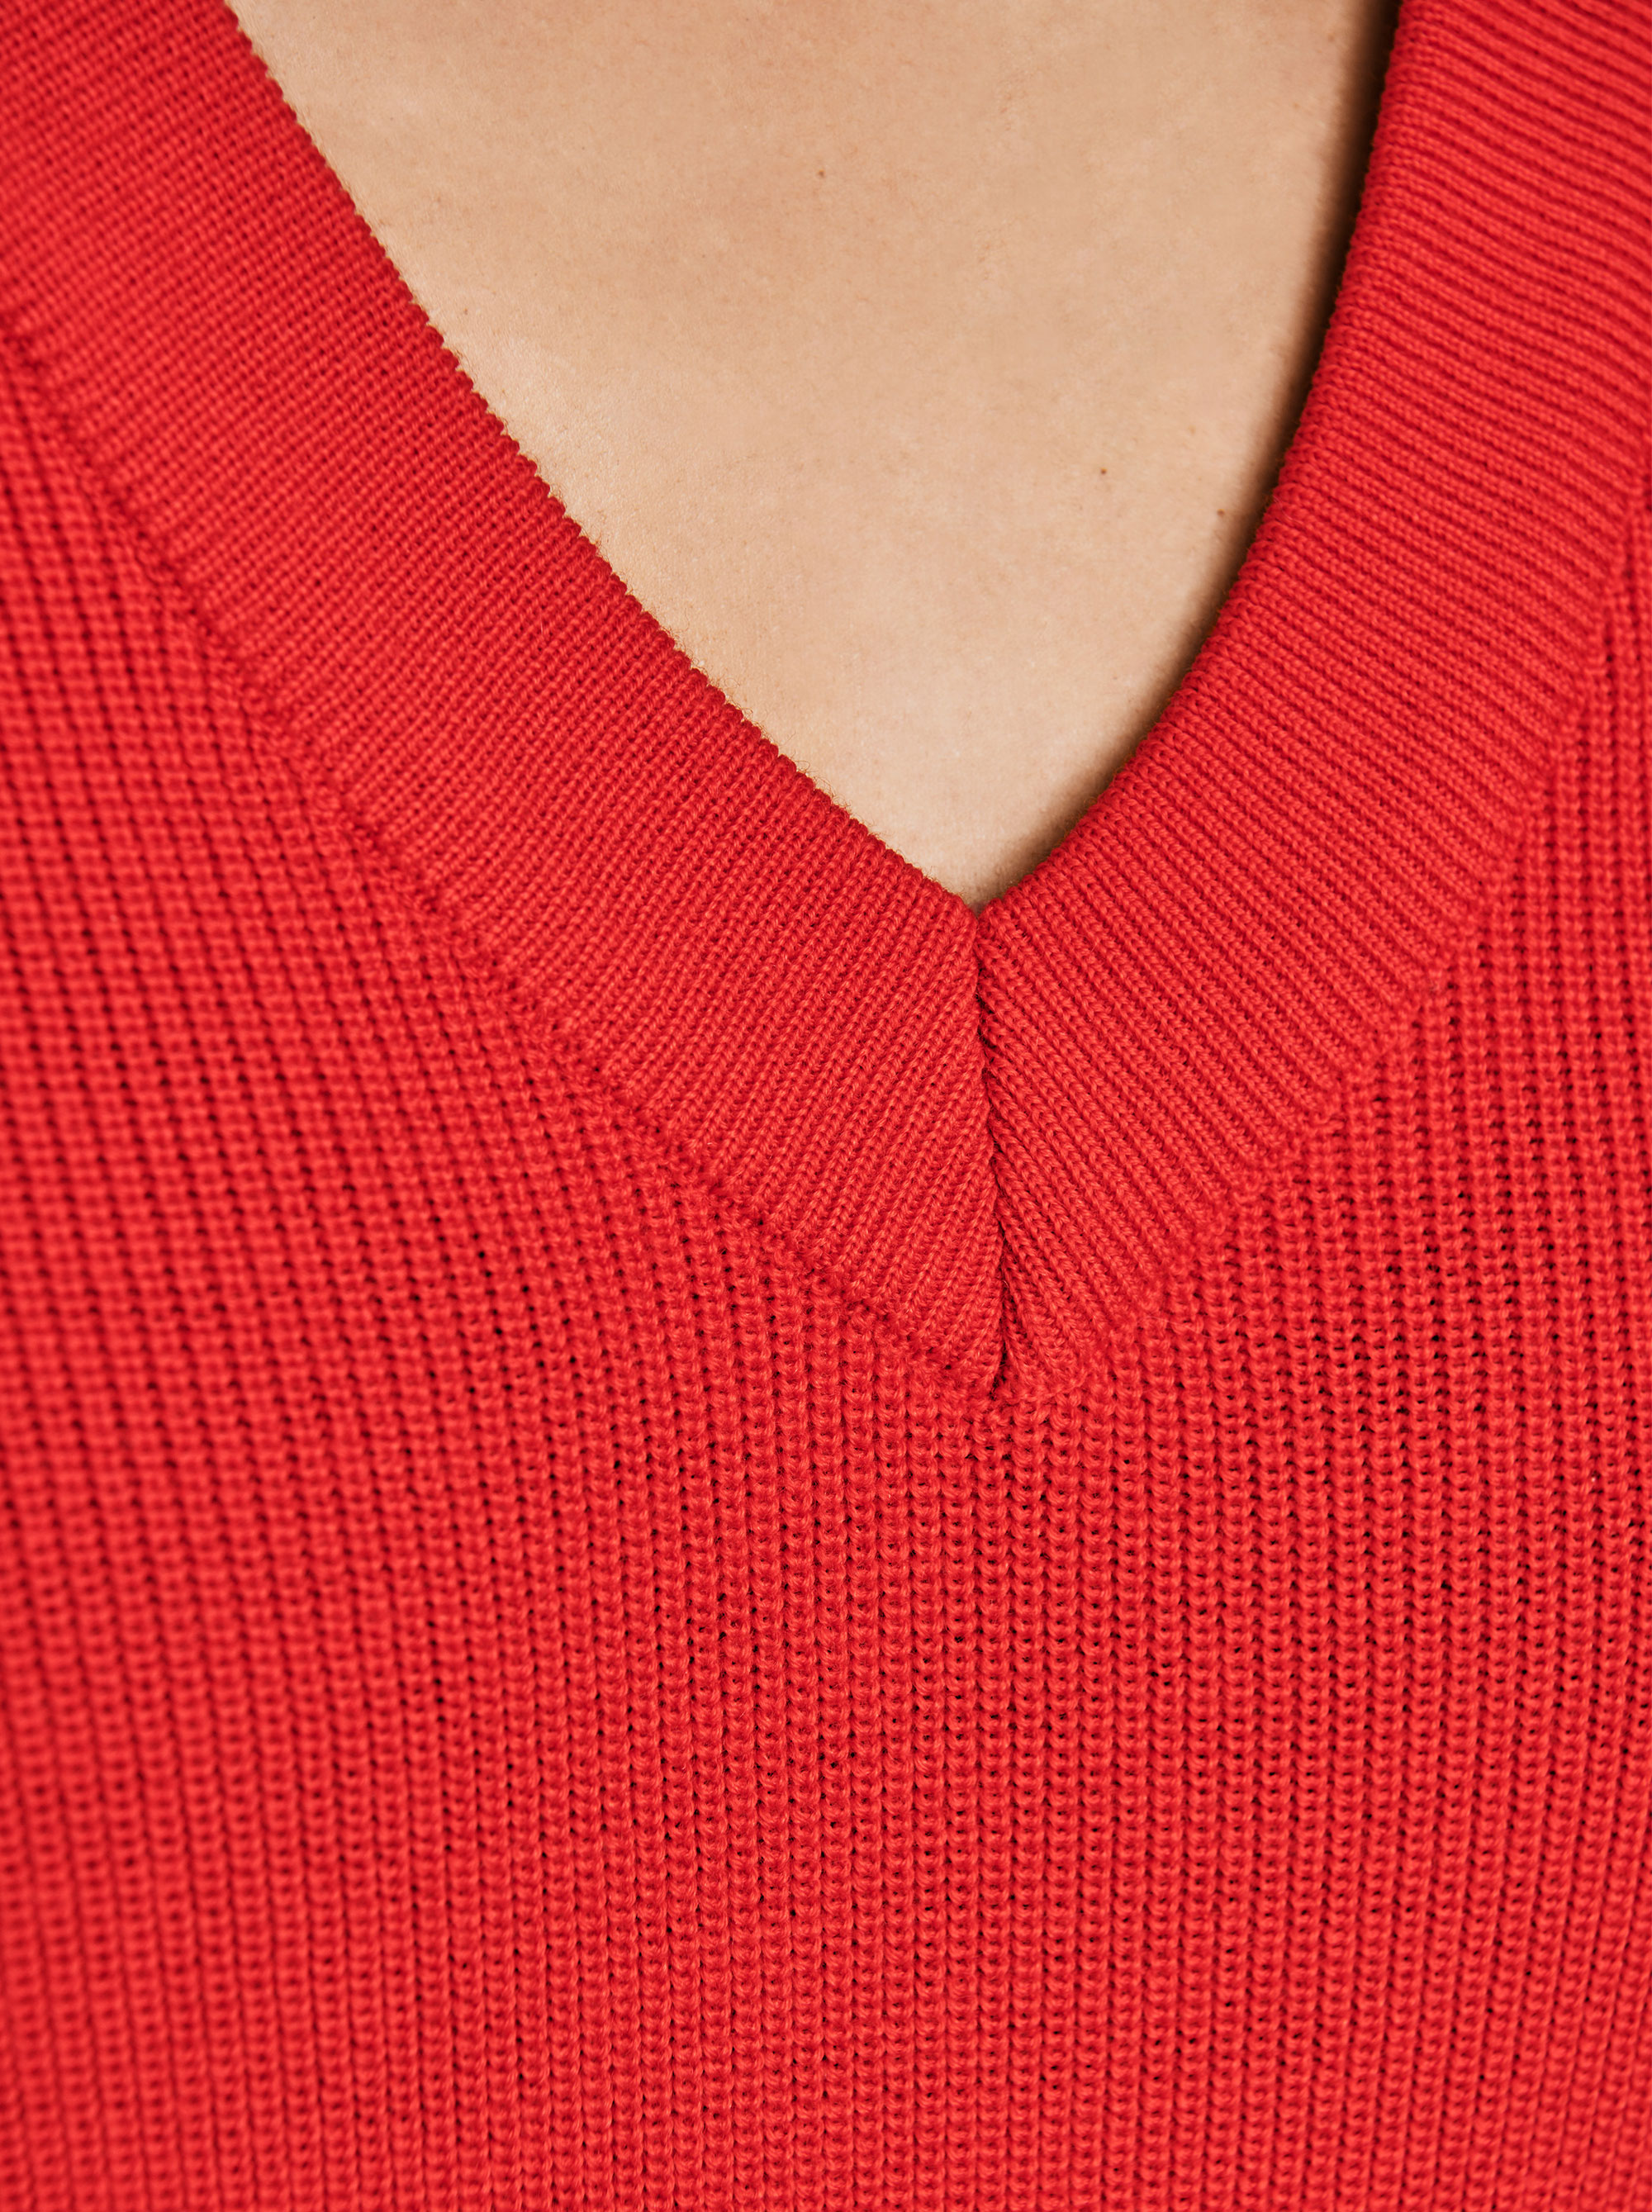 Teym - V-Neck - The Merino Sweater - Women - Red - 2